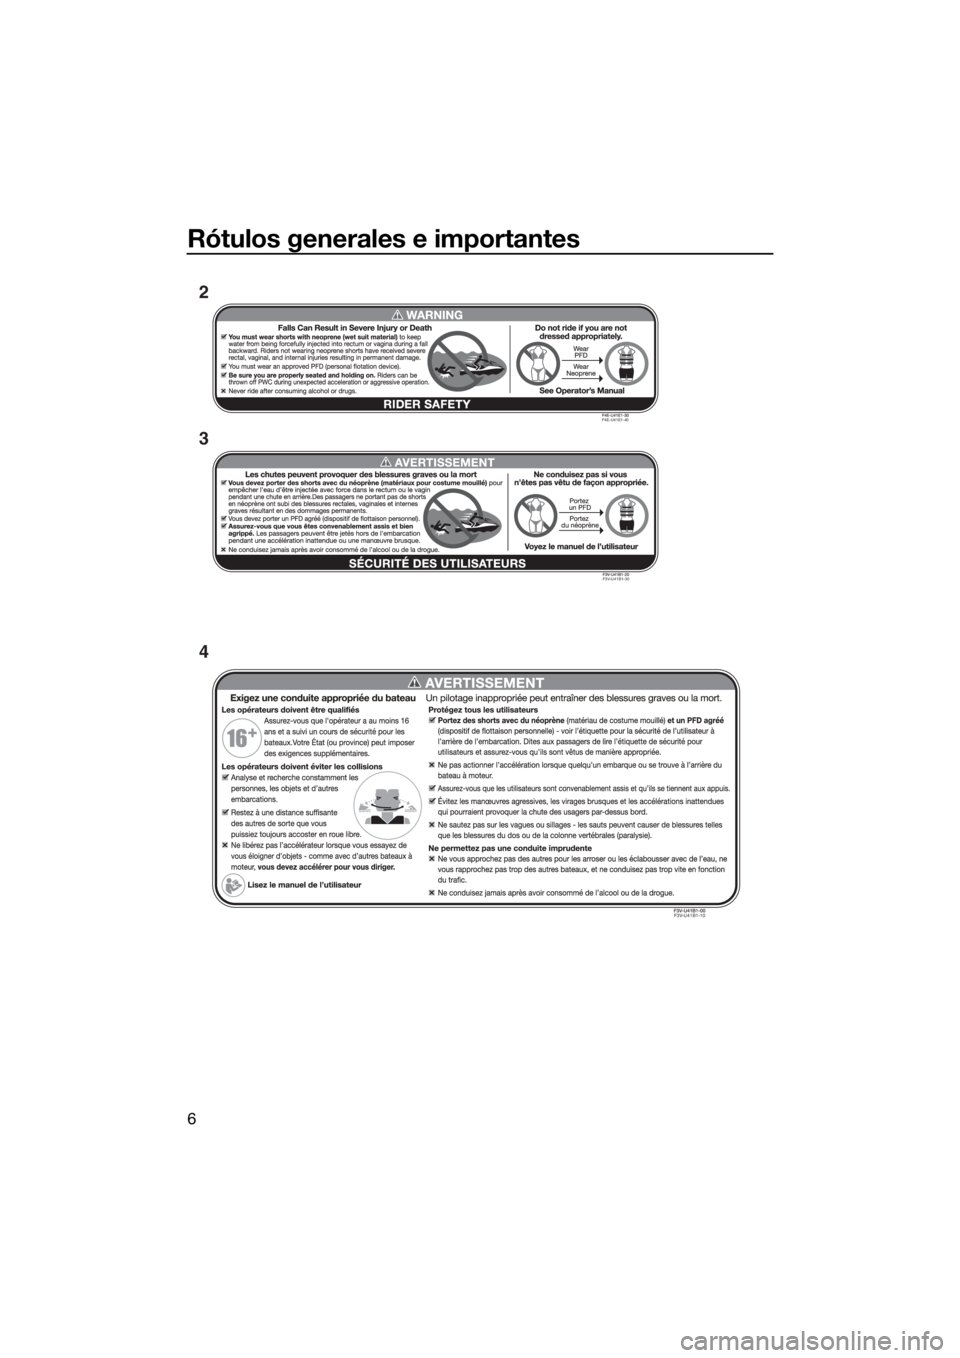 YAMAHA VX CRUISER 2020  Manuale de Empleo (in Spanish) Rótulos generales e importantes
6
3
4 2
F4E-U41E1-40
F3V-U41B1-30
F3V-U41B1-10
UF4G74S0.book  Page 6  Monday, July 15, 2019  3:52 PM 